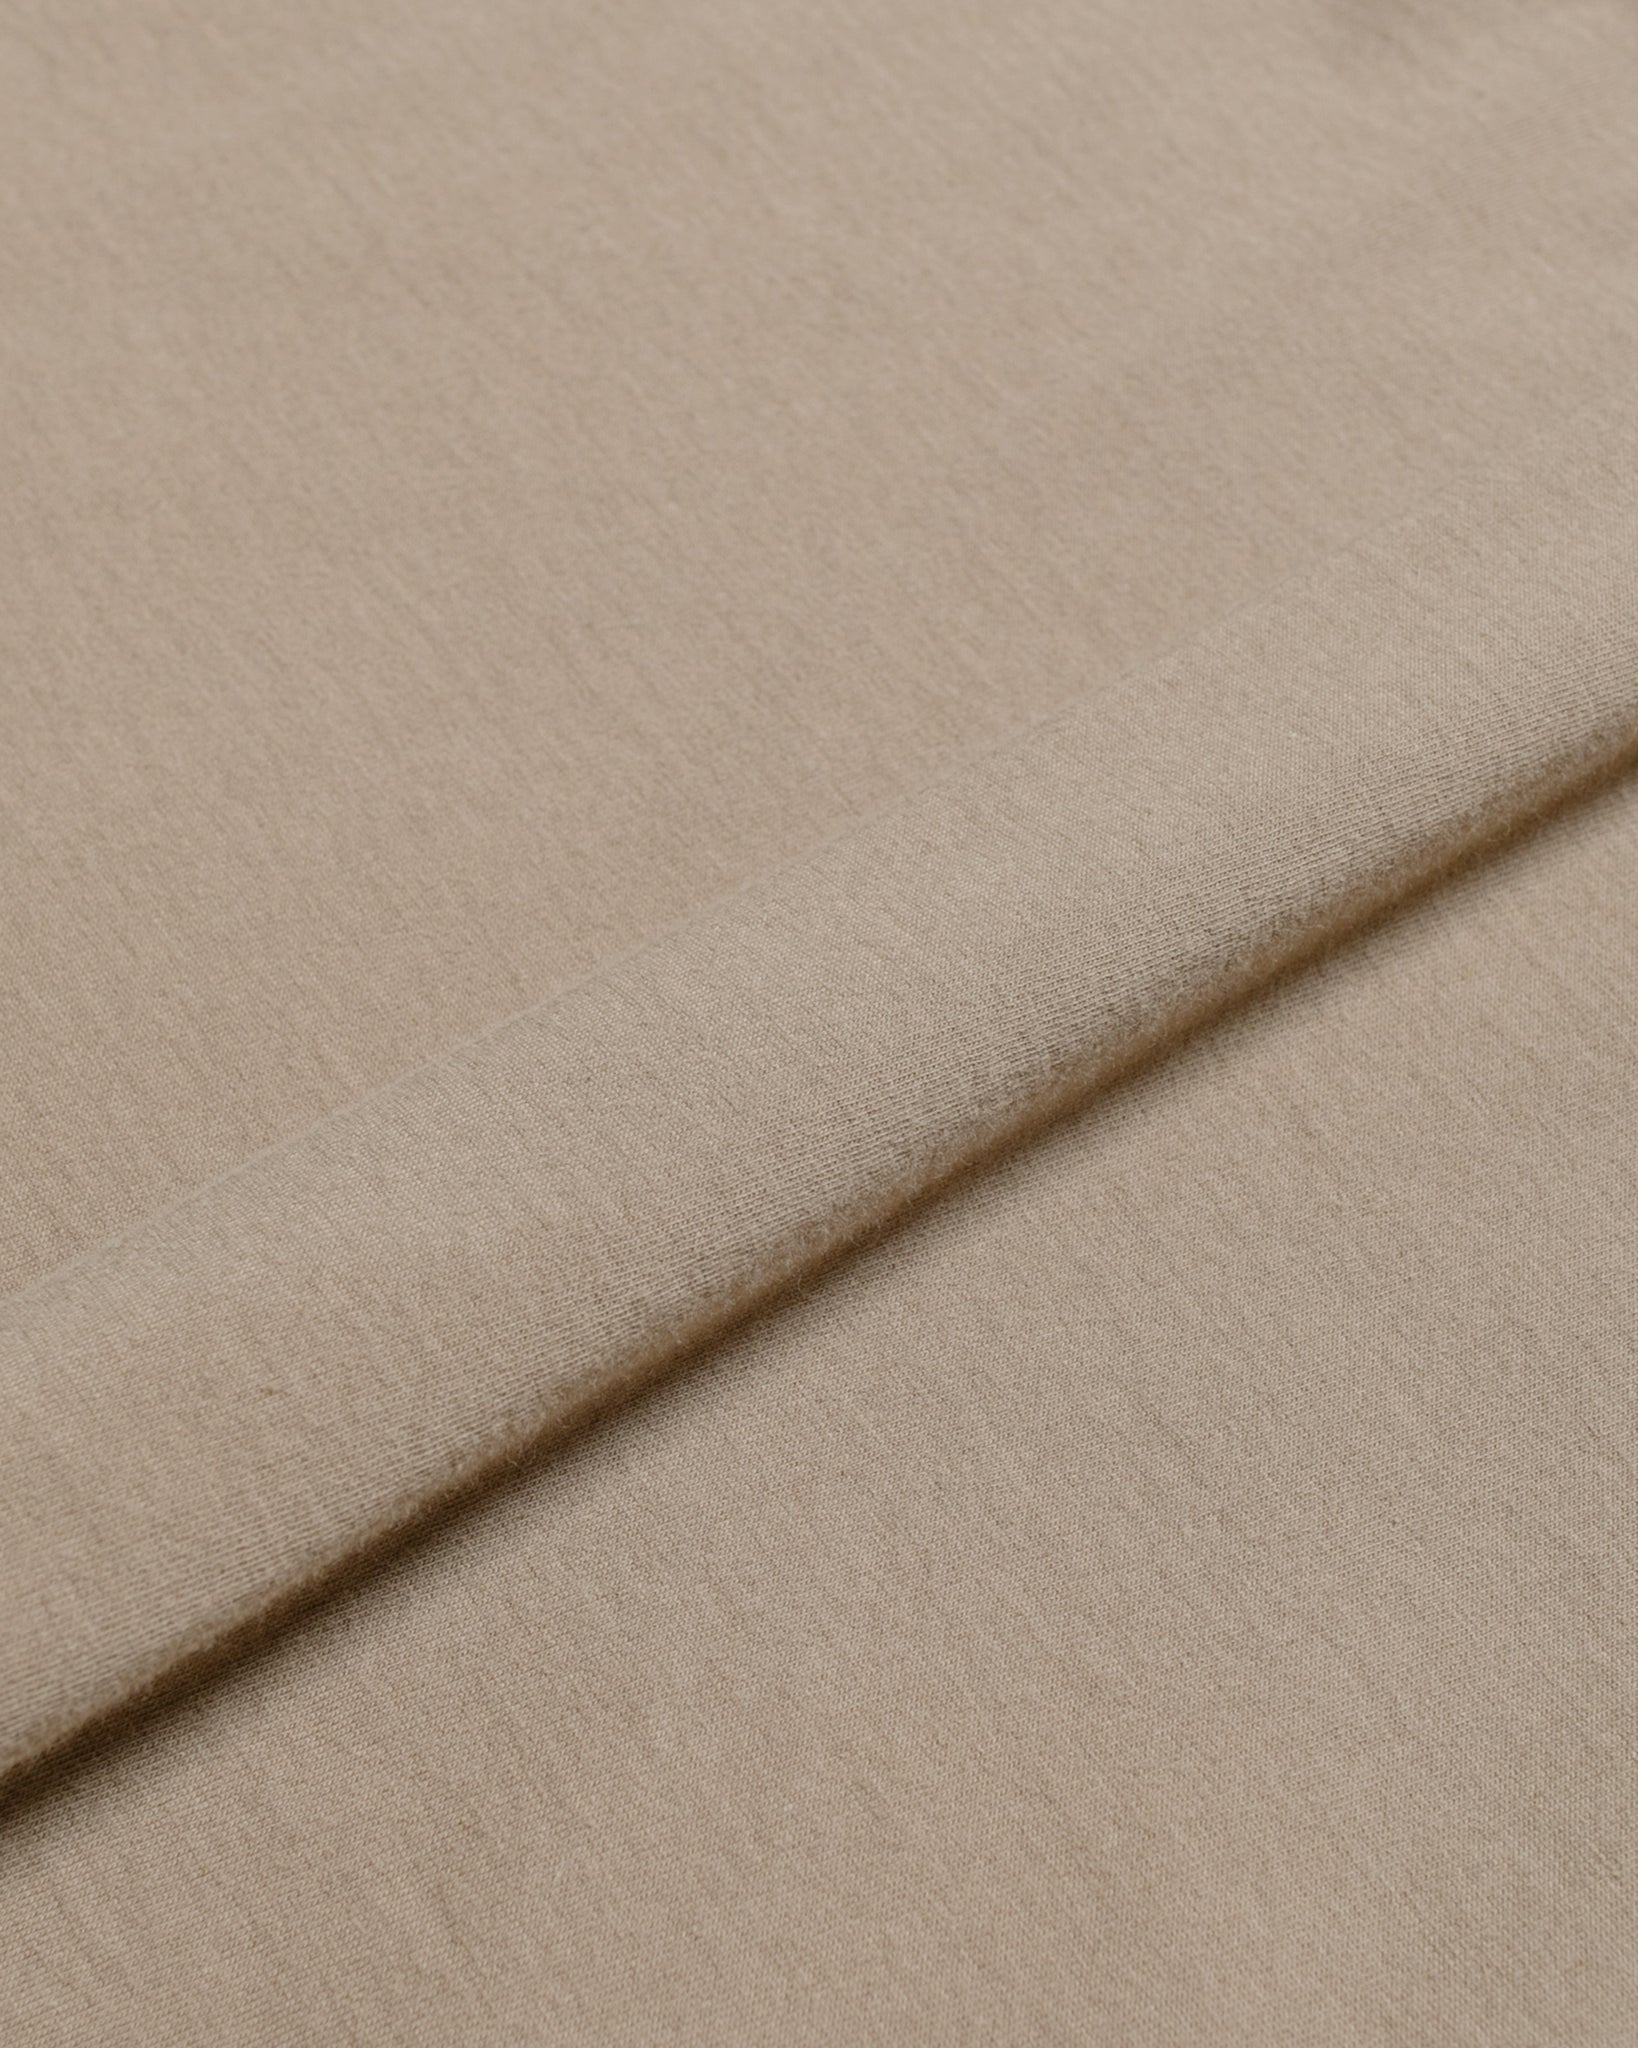 ts(s) Tank Top High Gauge Cotton Jersey Khaki fabric